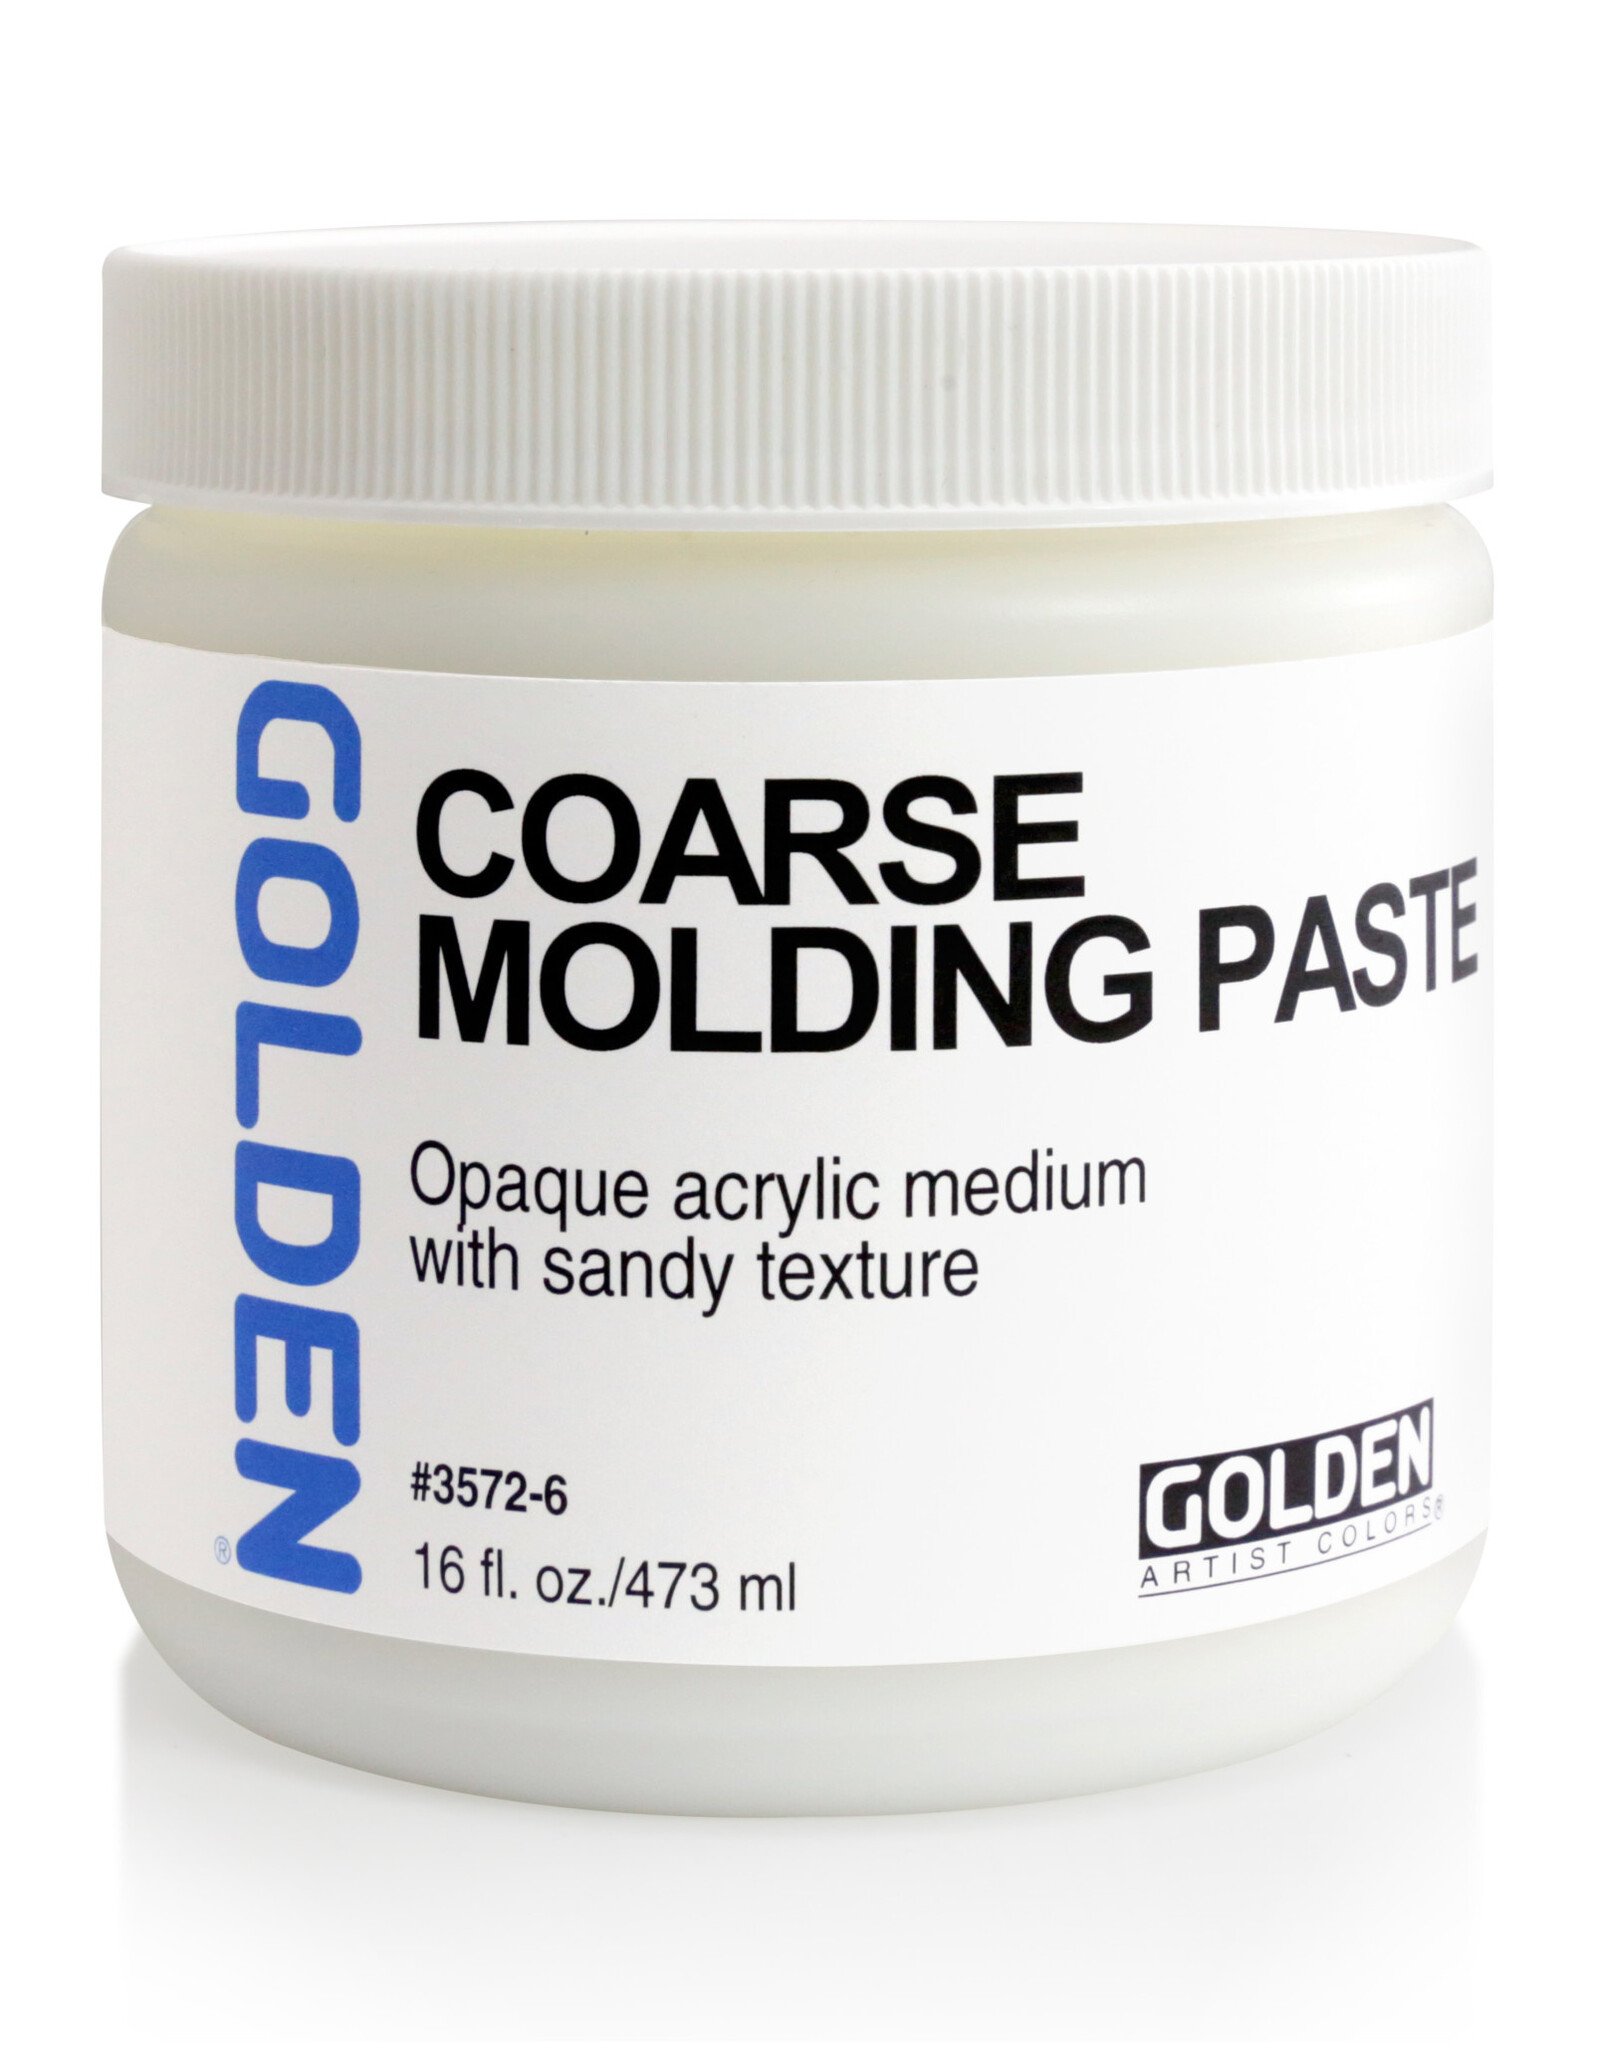 Golden Golden Coarse Molding Paste, 16oz jar